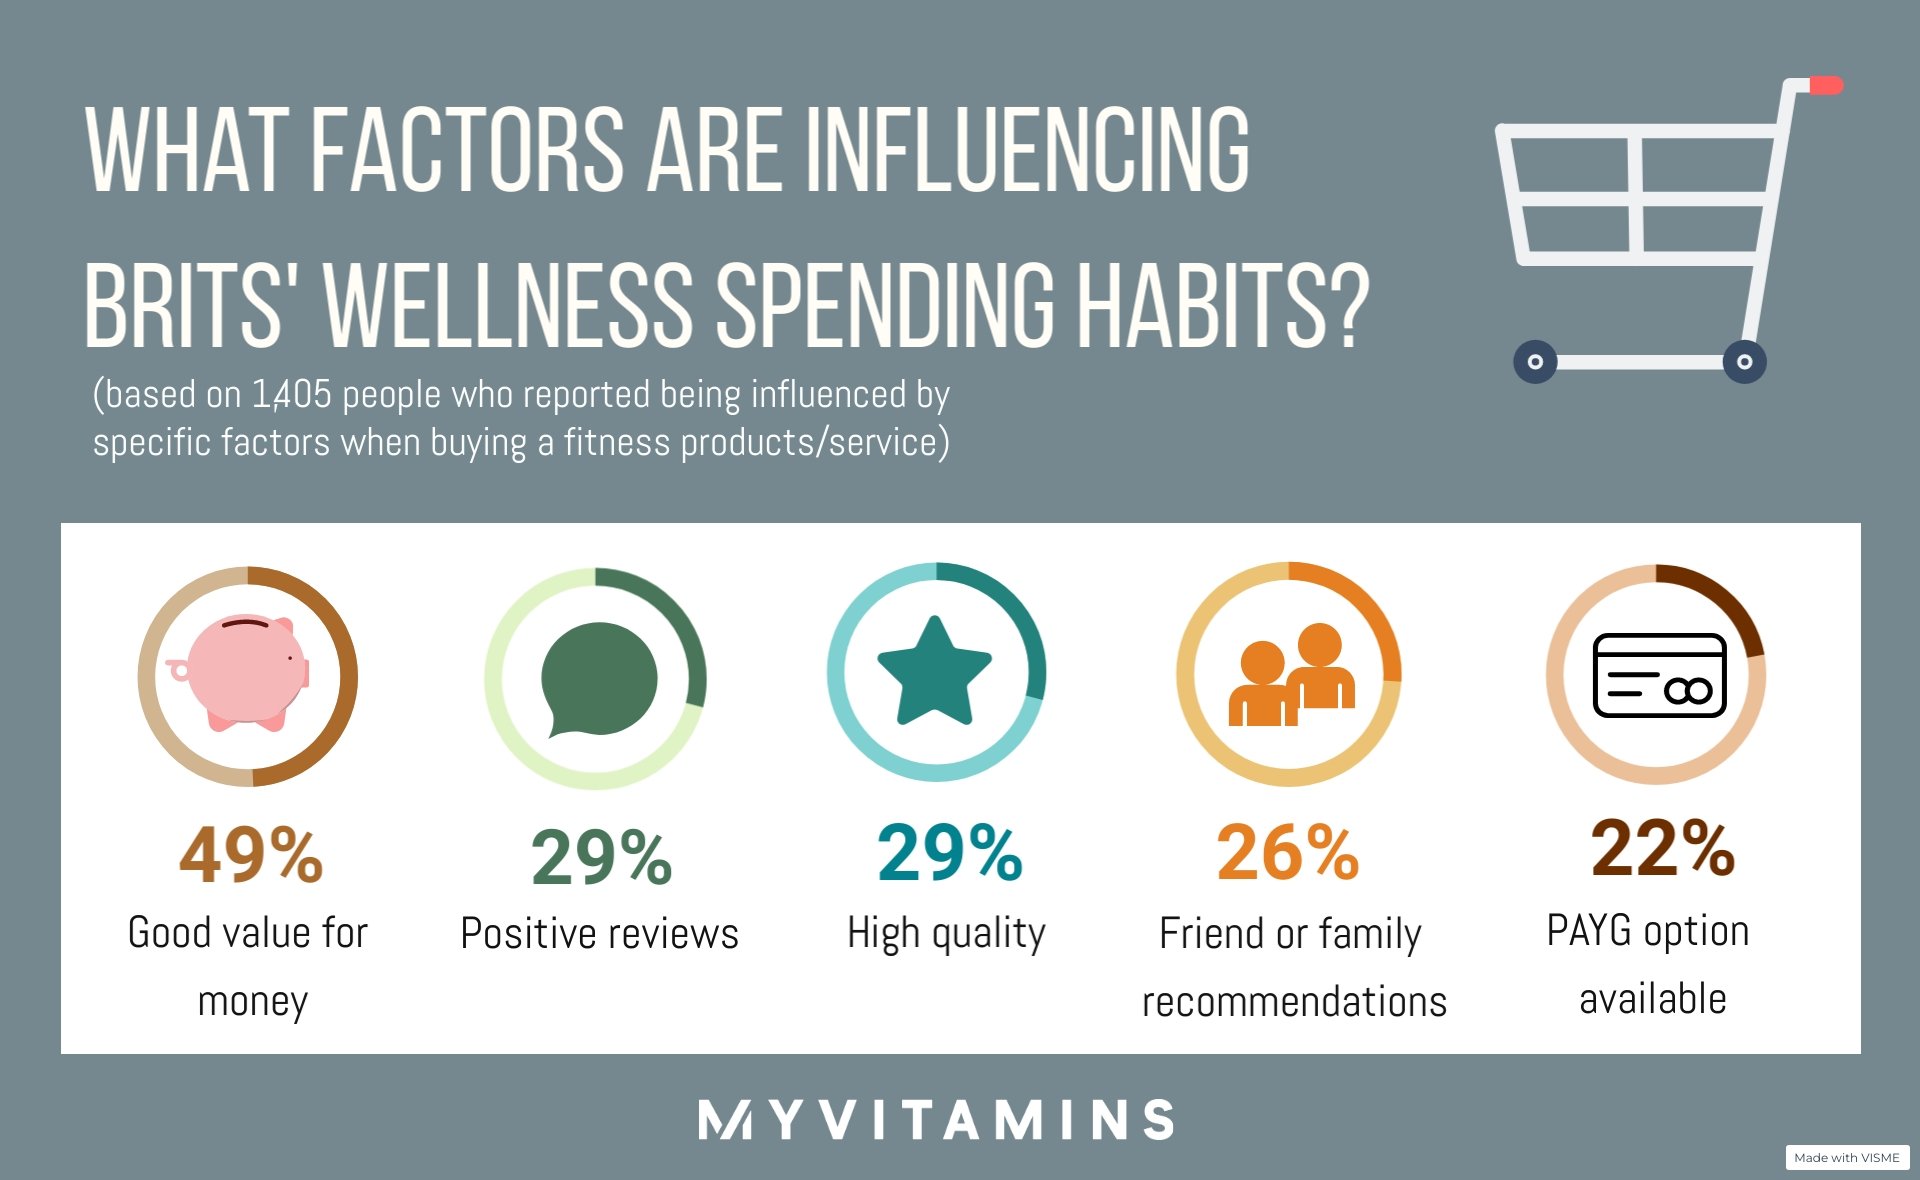 Factors that influence Brits wellness spending habits